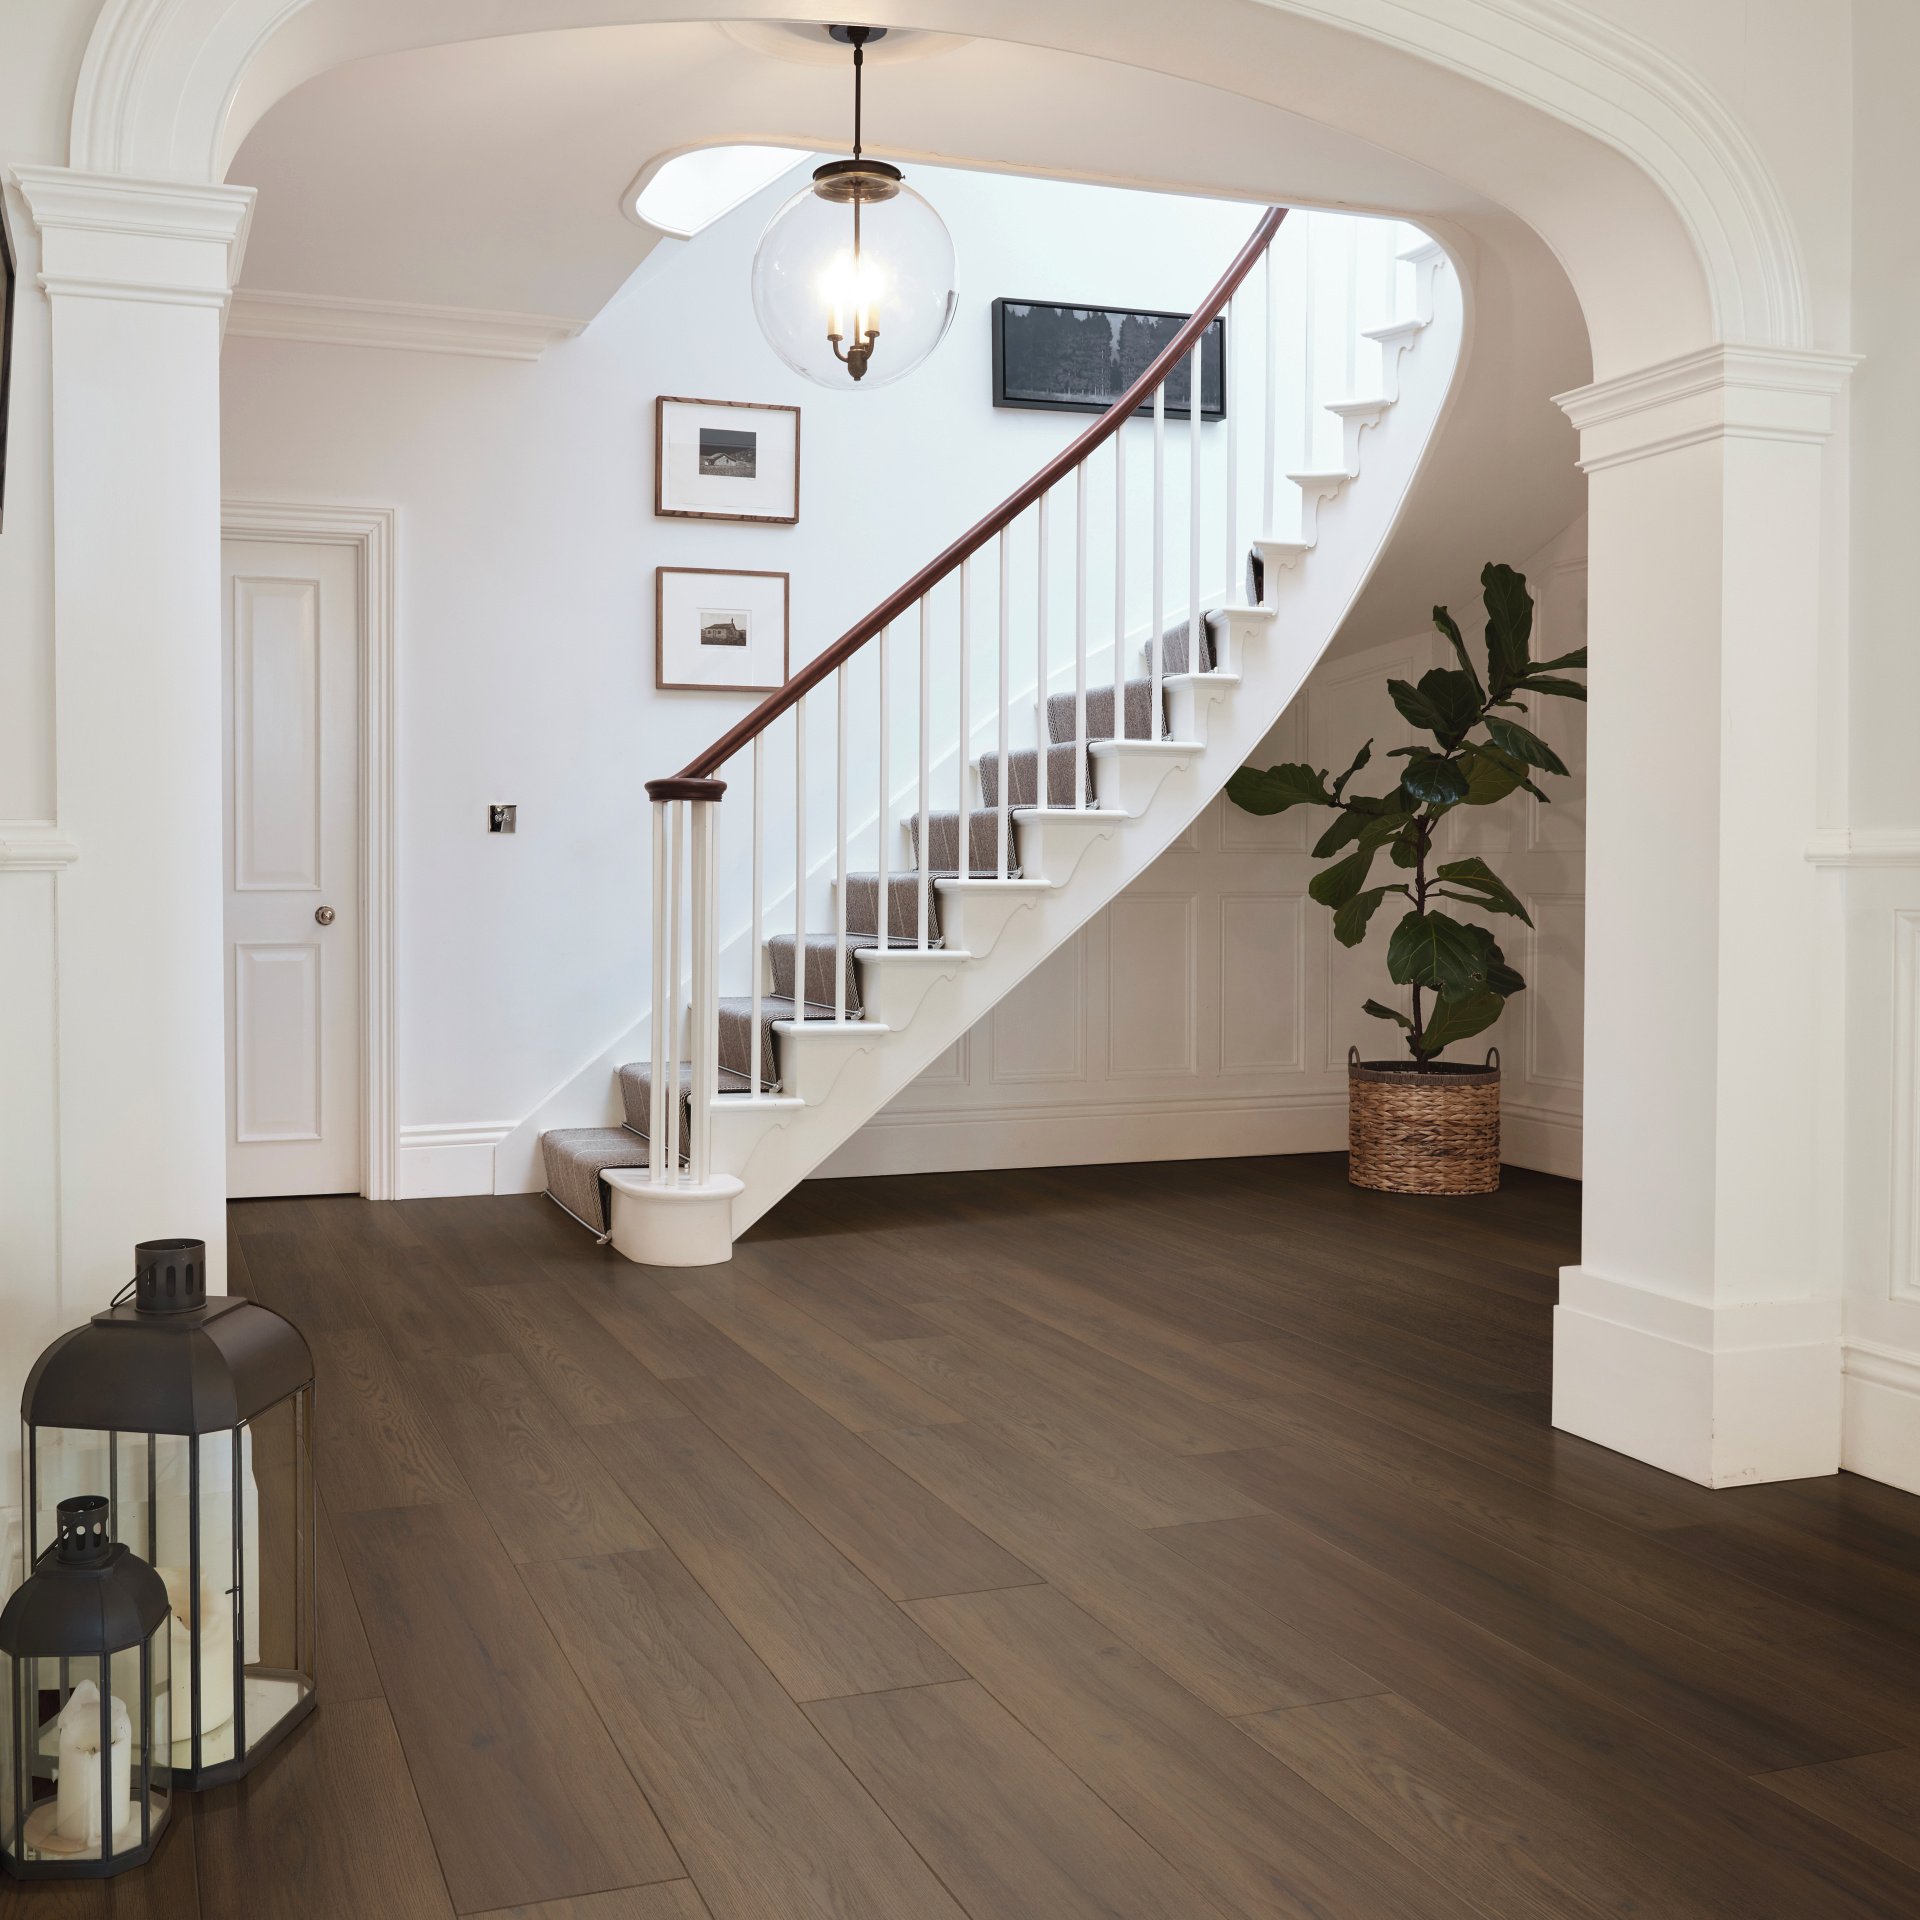 Serrano Oak floors in an elegant entryway